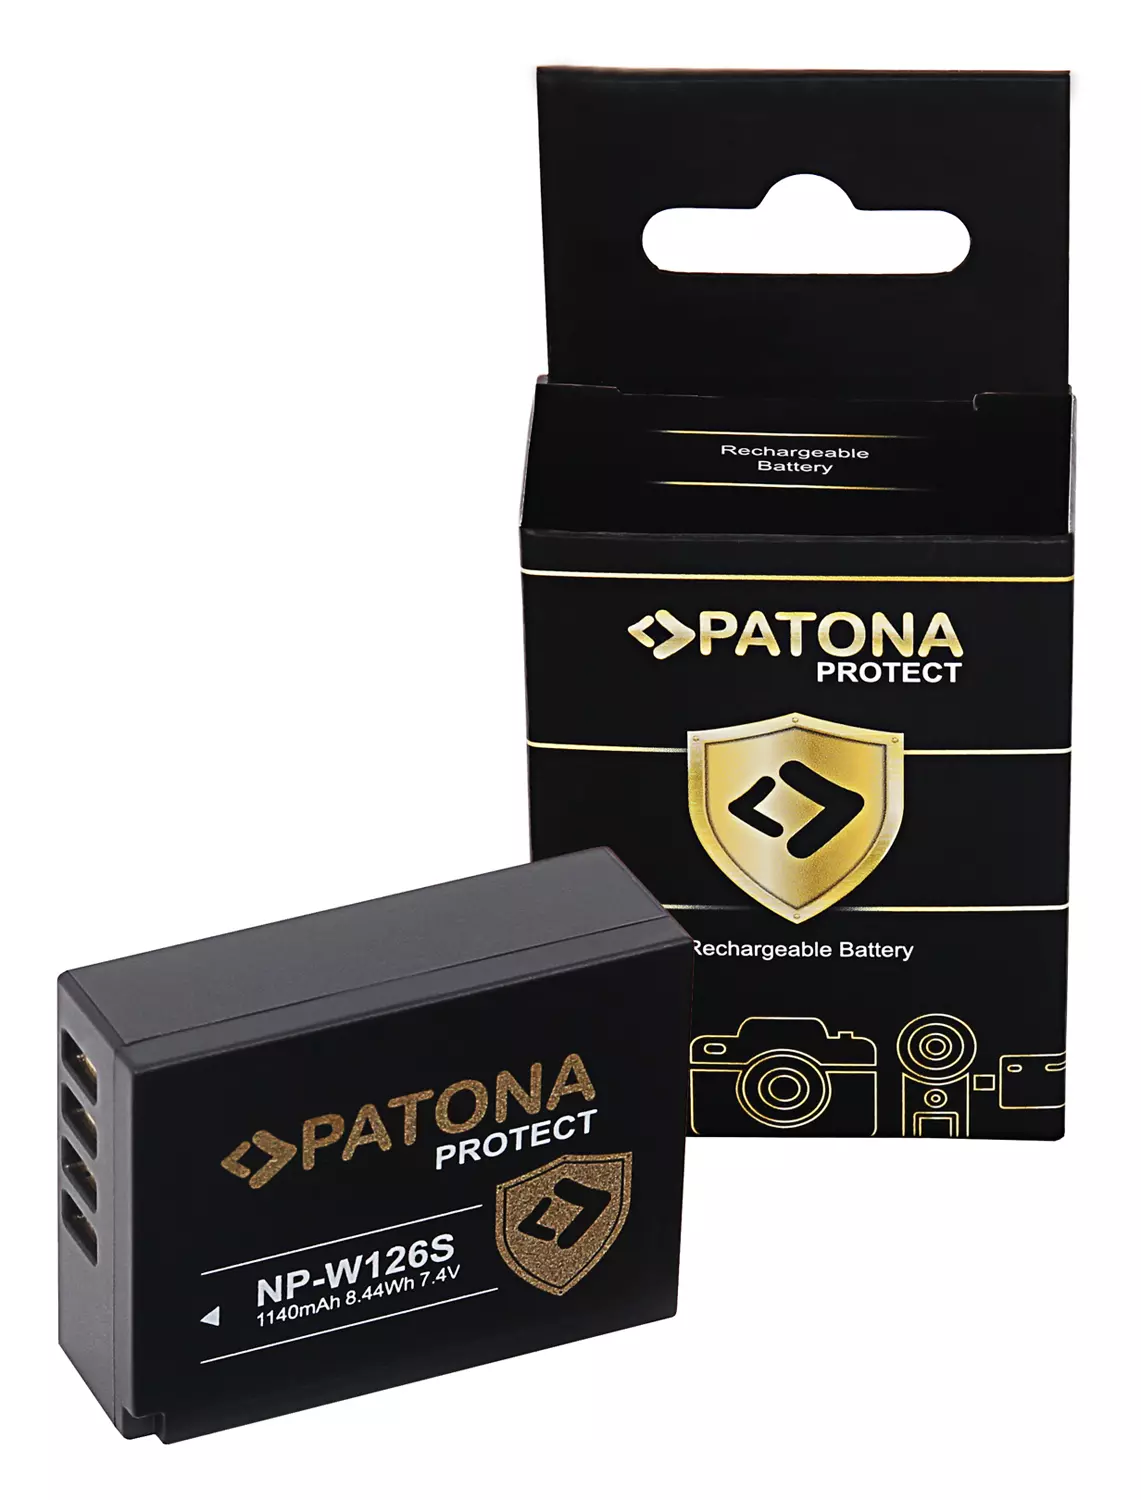 Baterie PATONA Protect Fuji X-T3 VPB-XT3 NP-W126S HS33 EXR Fujifilm - Patona Protect